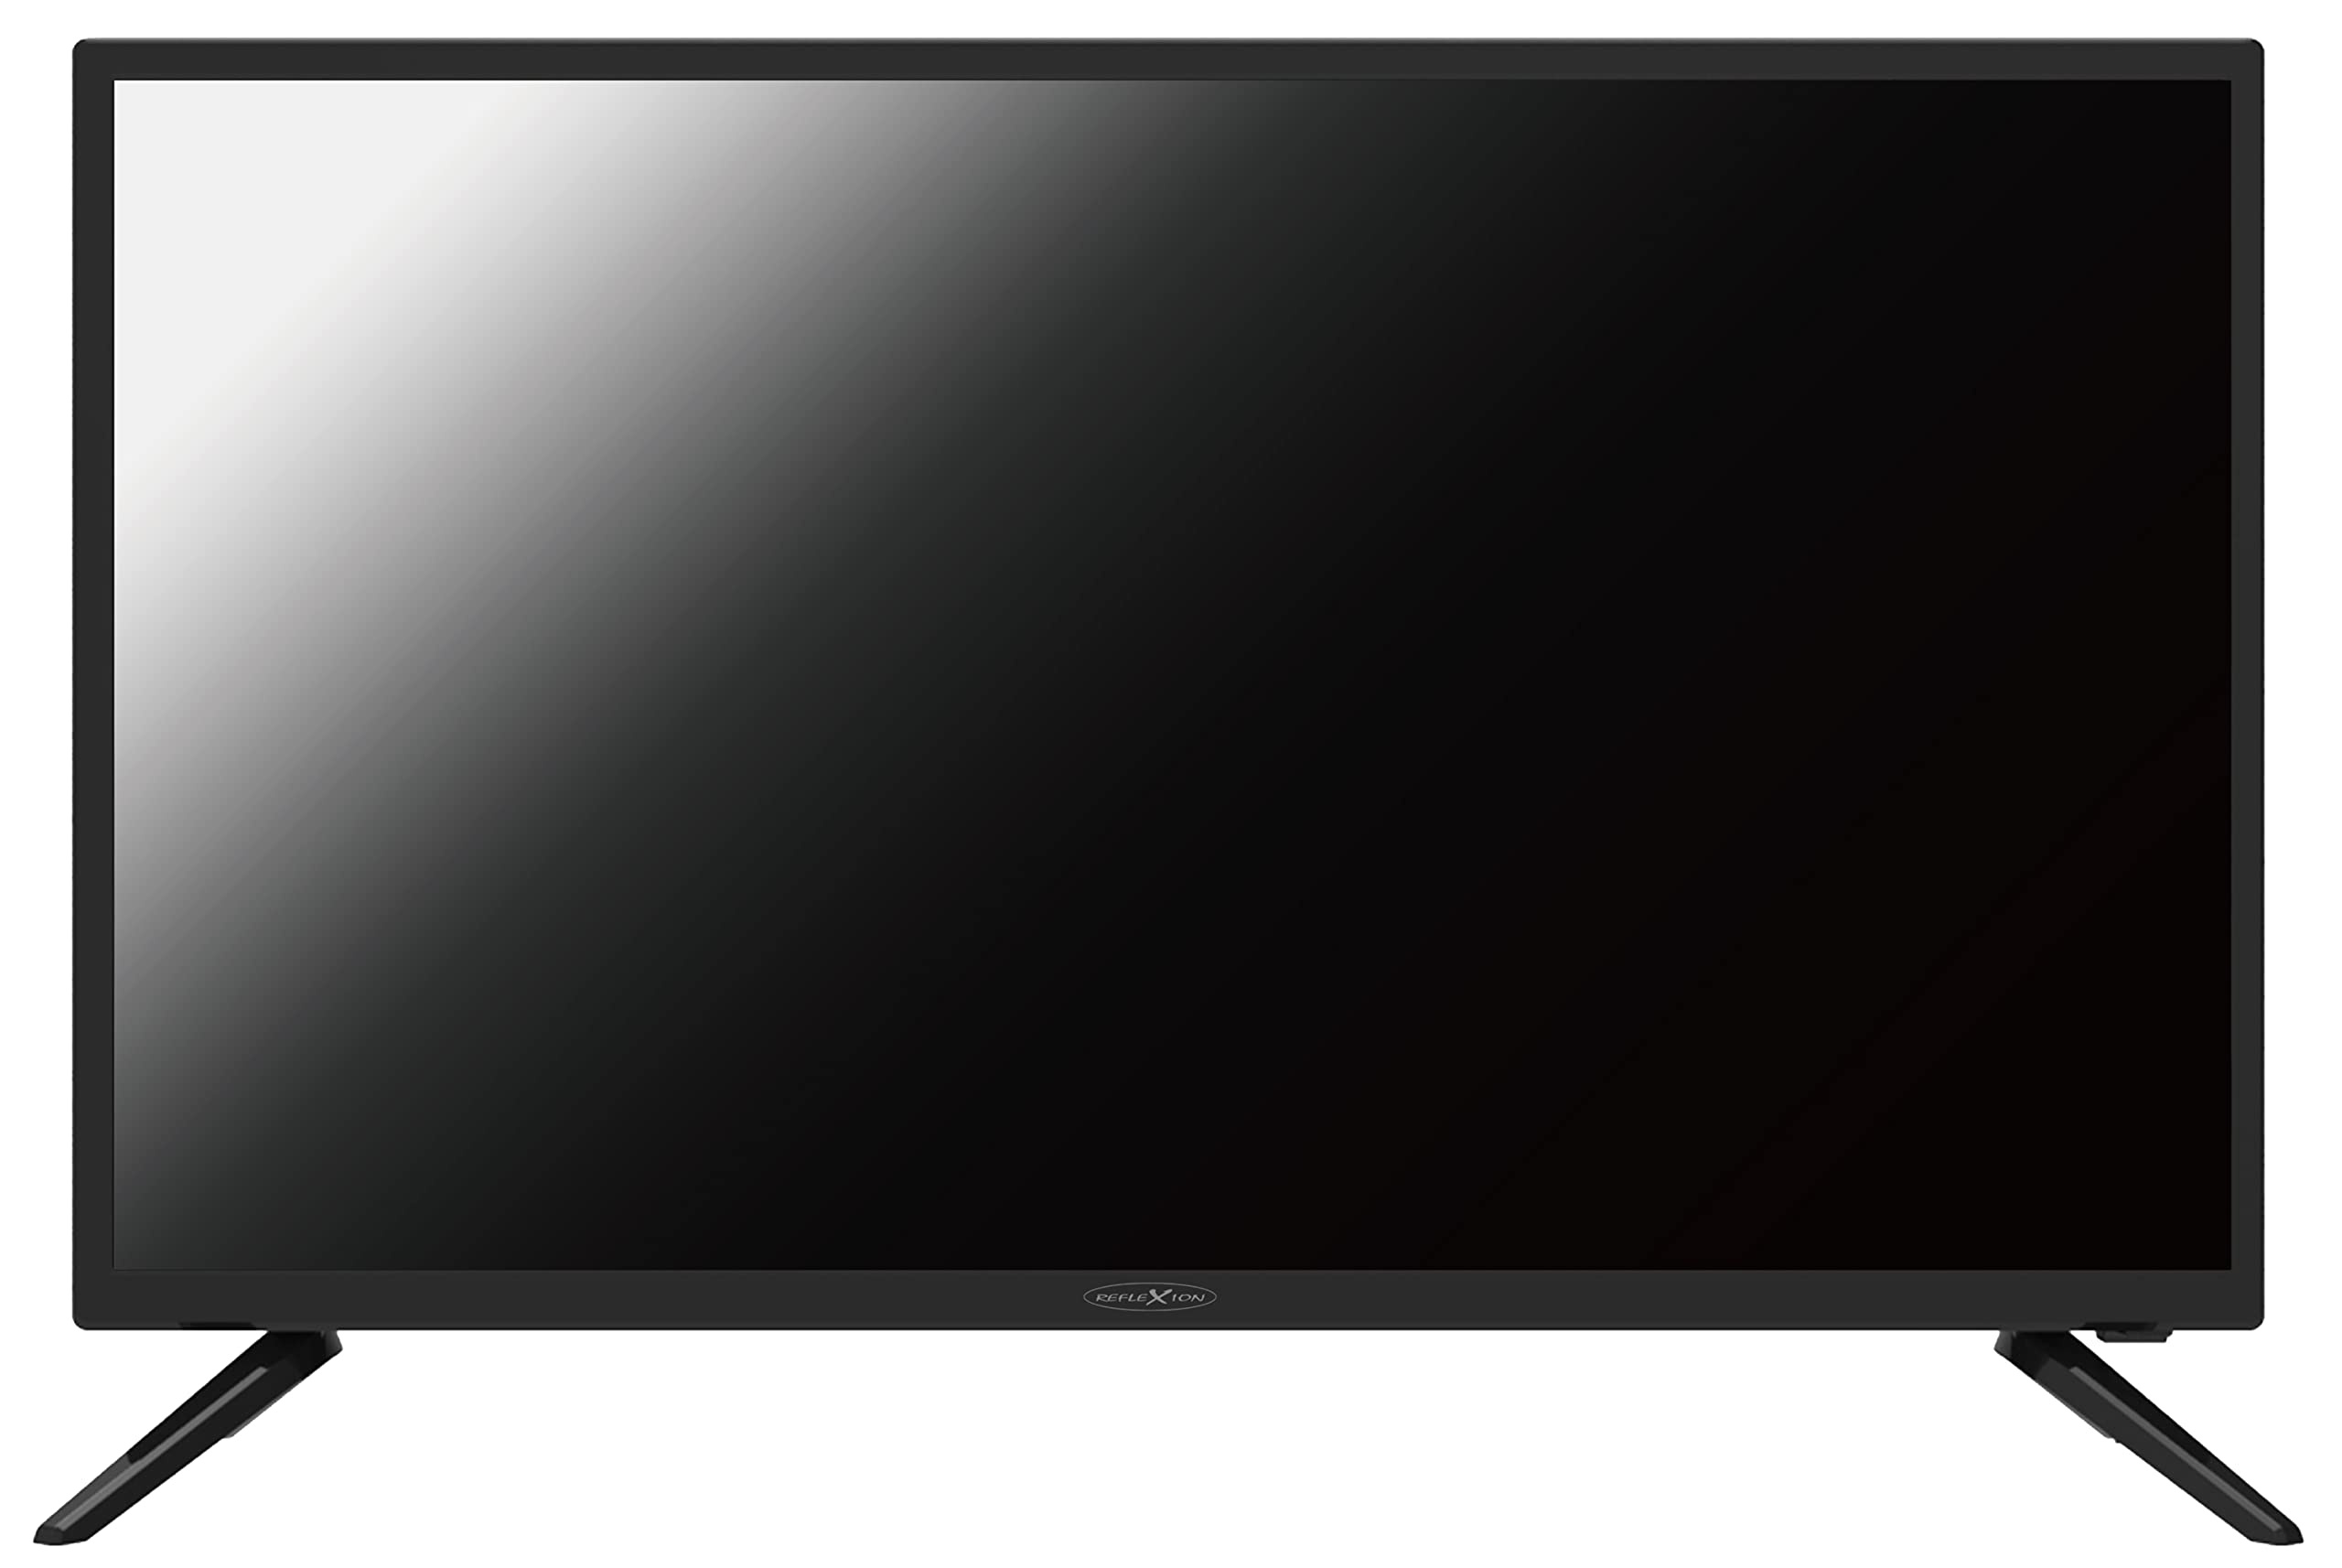 REFLEXION LDDW-320 Full HD LED-Fernseher (32 Zoll) für Wohnmobile mit DVB-T2 HD, DVD-Player, Triple-Tuner und 12 / 24 Volt Kfz-Adapter (Wide Screen, HDMI, USB, EPG, CI+, DVB-T Antenne), schwarz